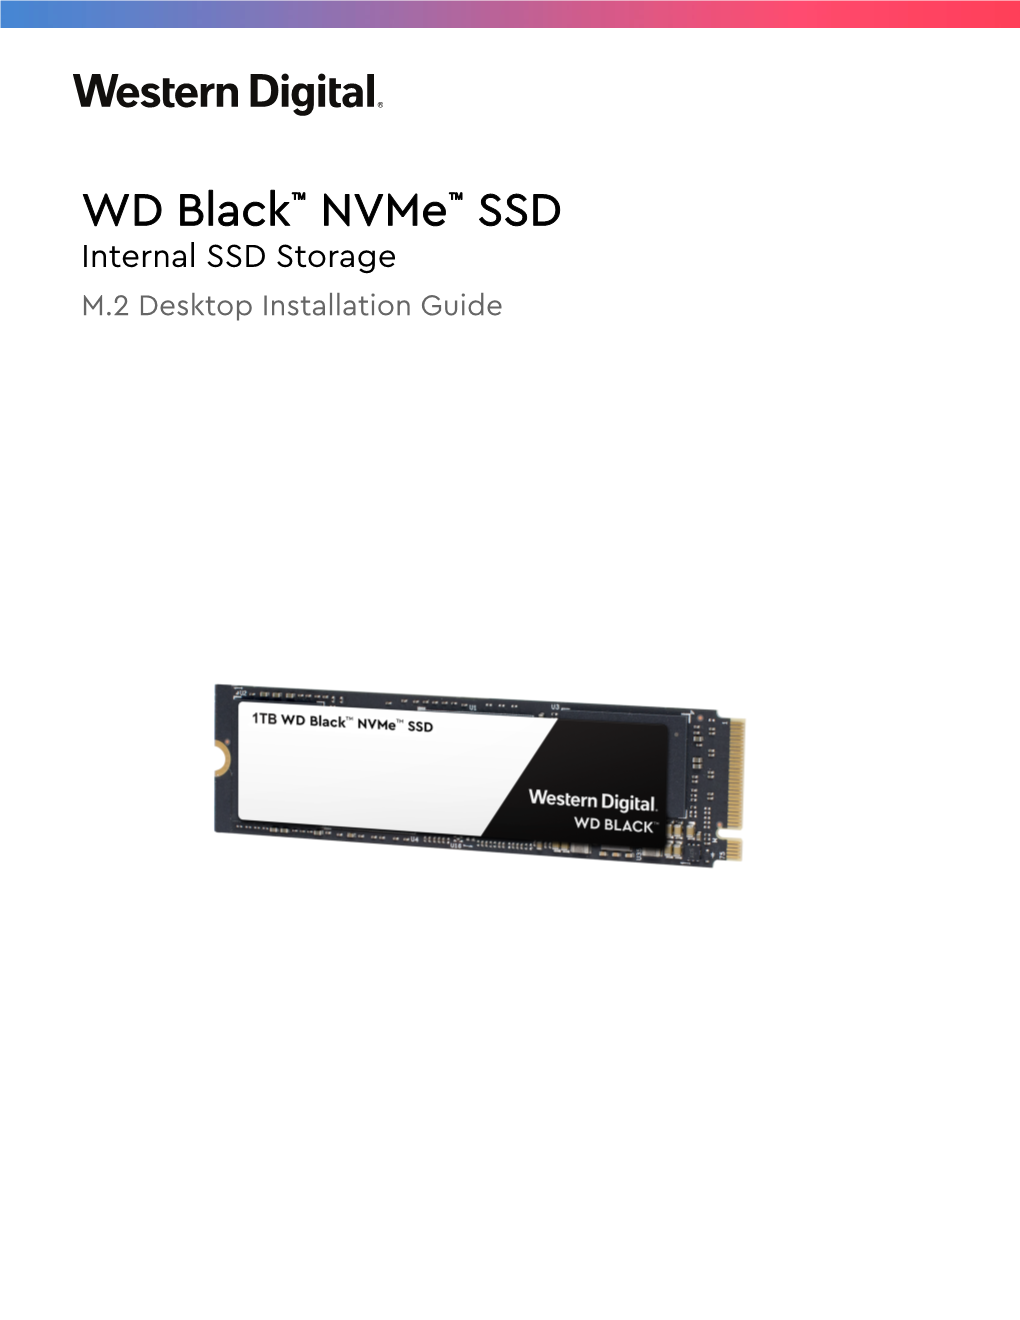 WD Black™ Nvme™ SSD Internal SSD Storage M.2 Desktop Installation Guide Accessing Online Support